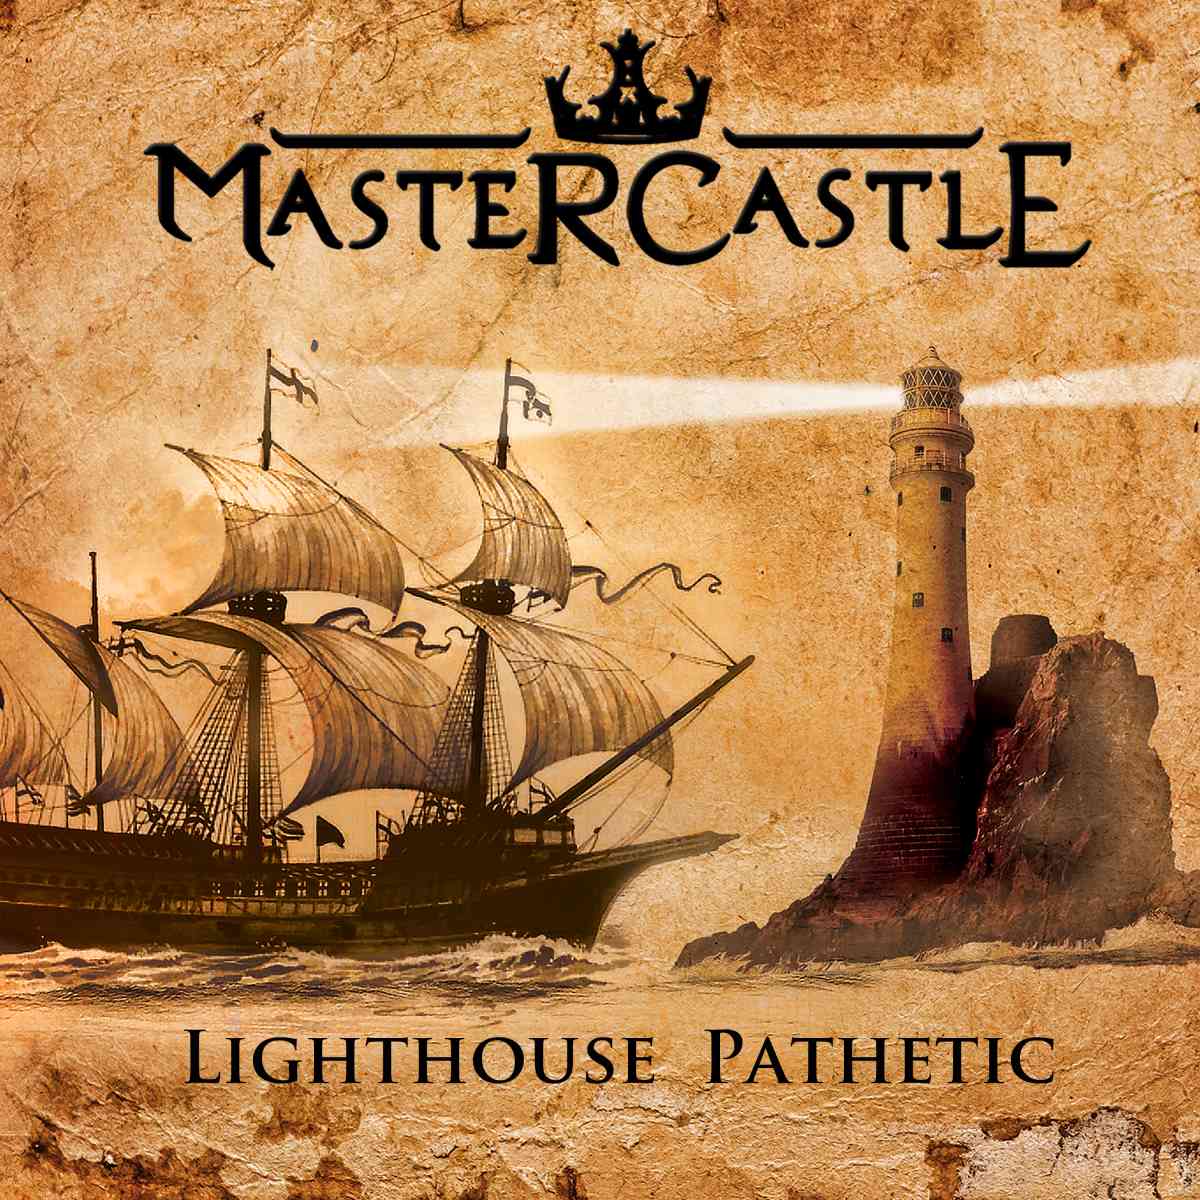 Mastercastle - Lighthouse pathetic - album cover